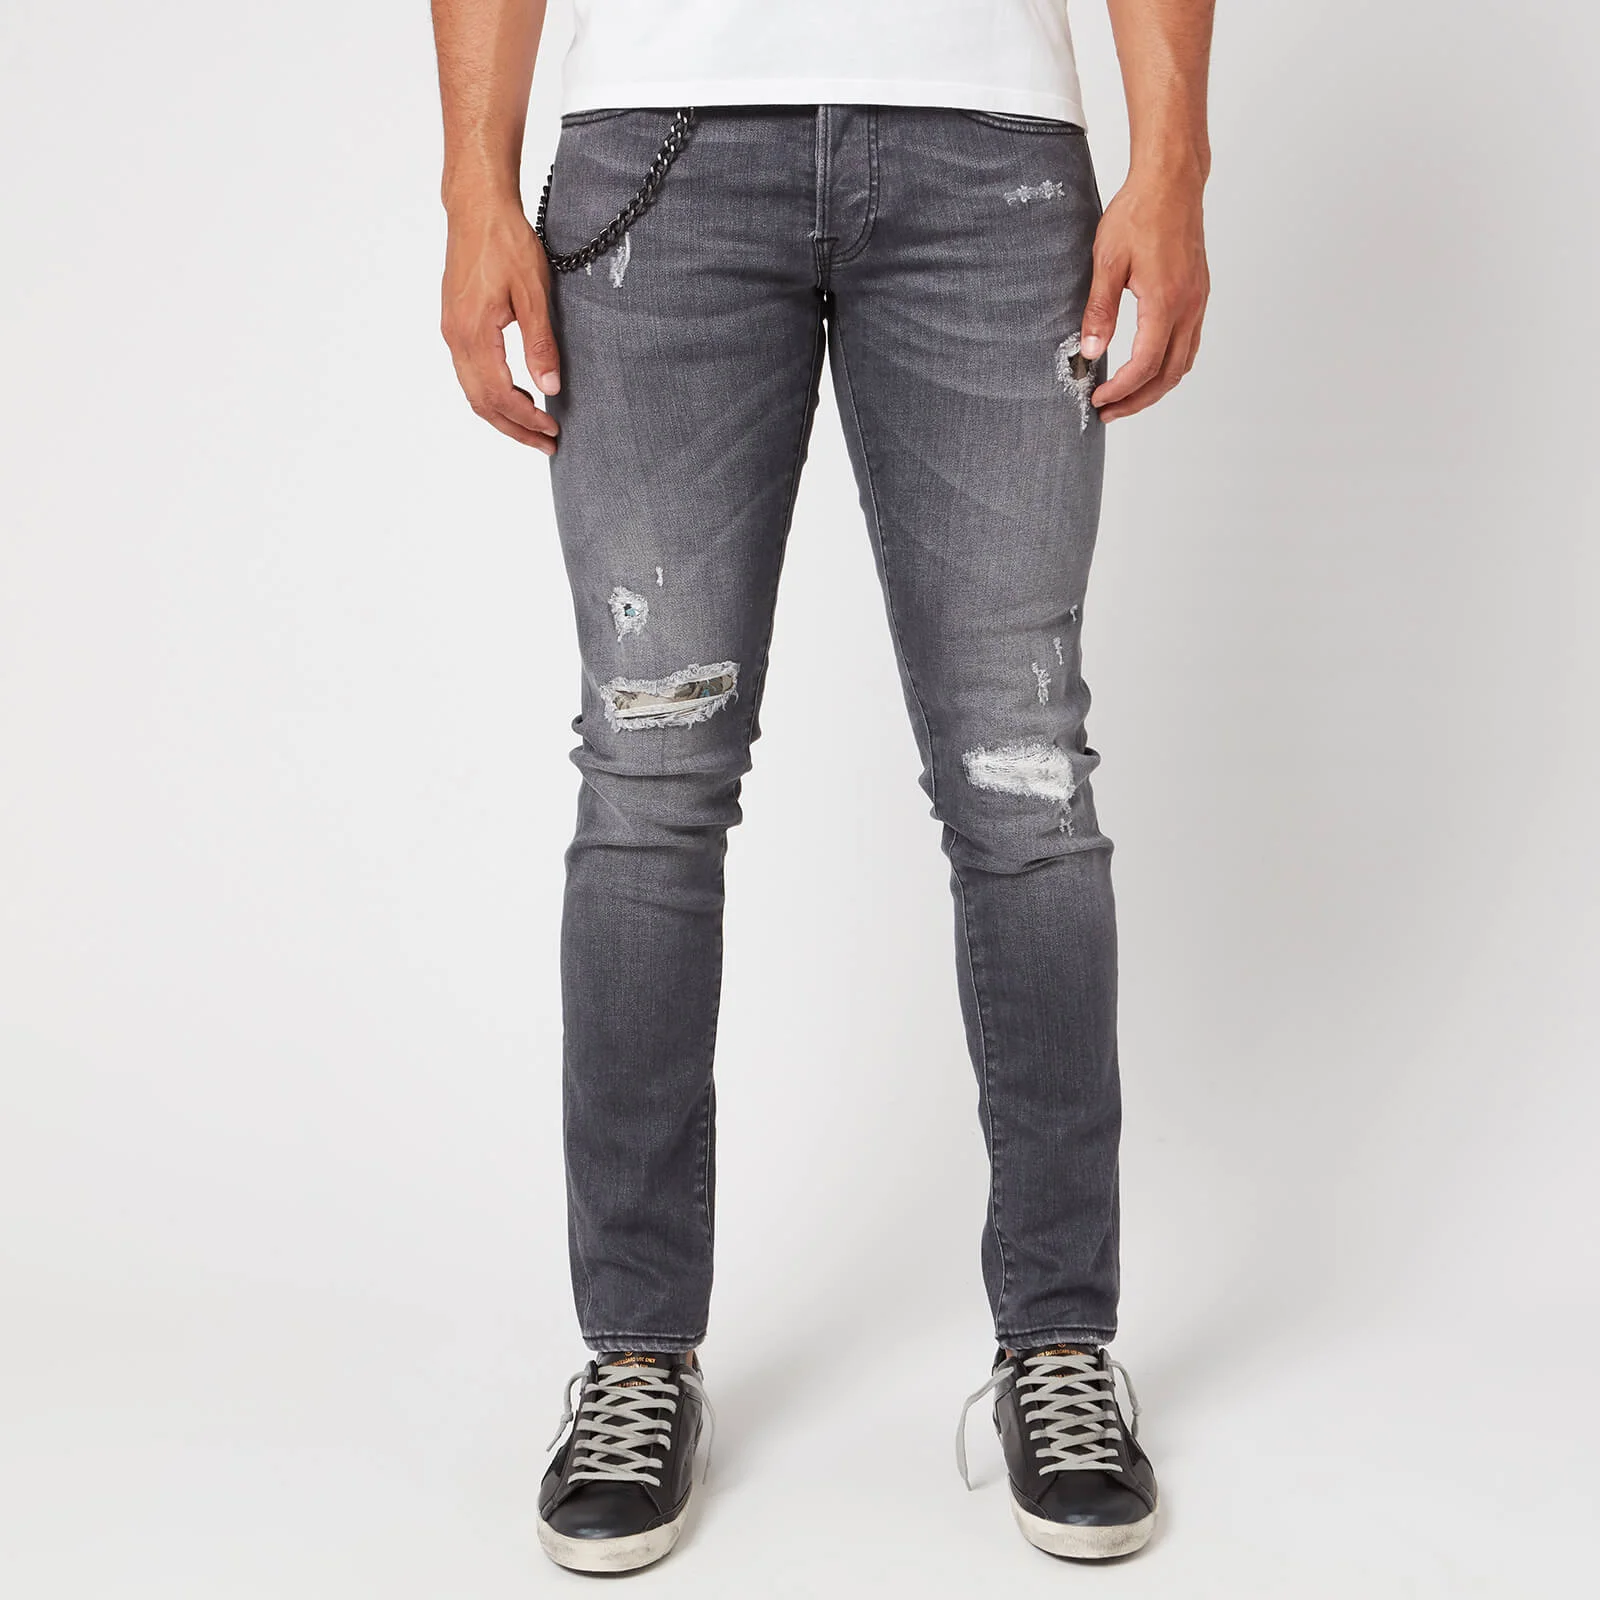 Tramarossa Men's 1980 Ripped Jeans - Denim Comfort Grey Image 1